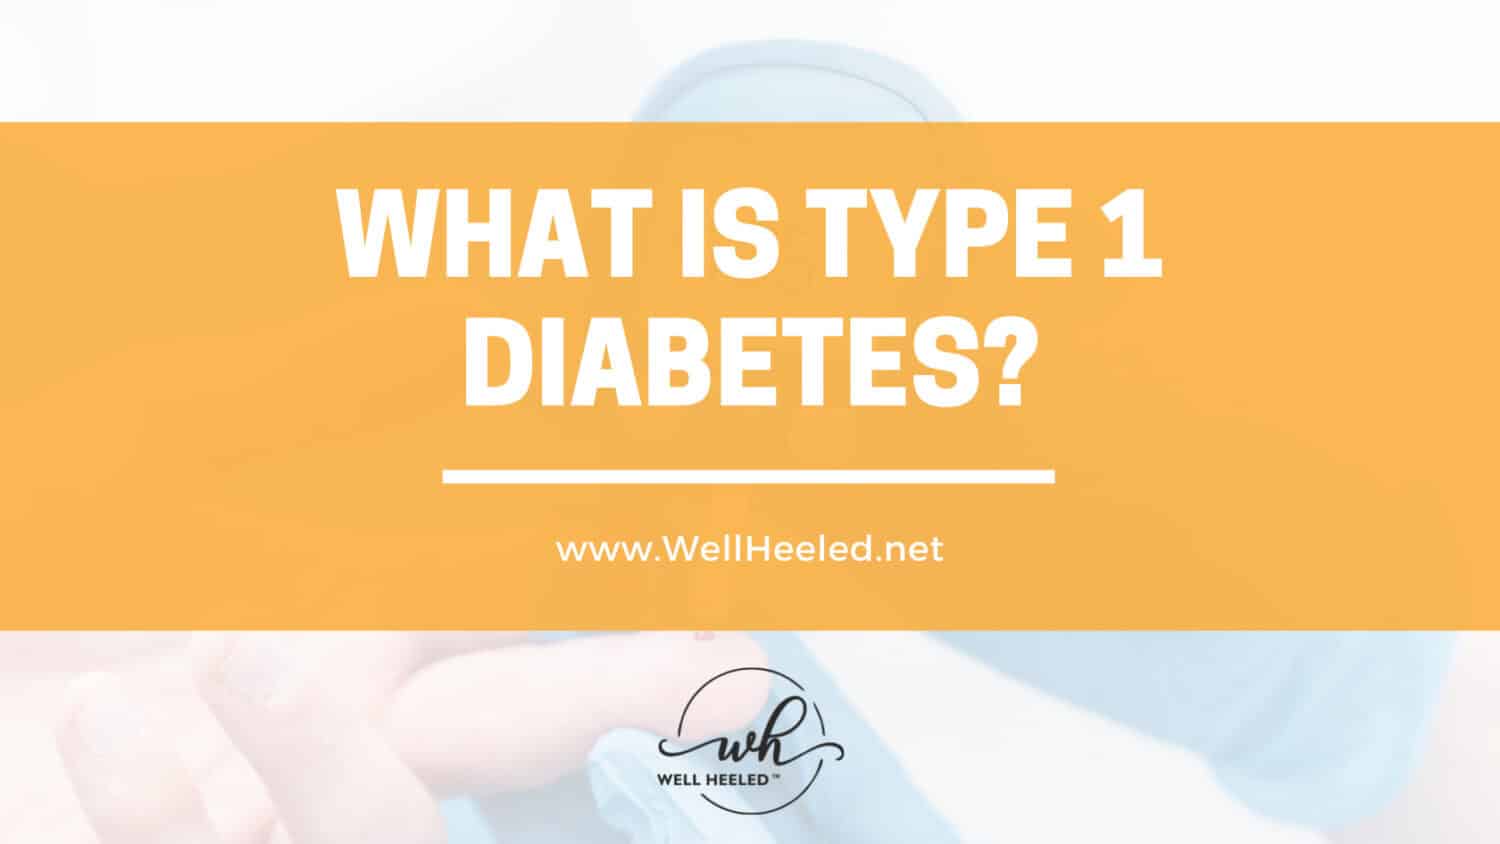 What is type 1 diabetes